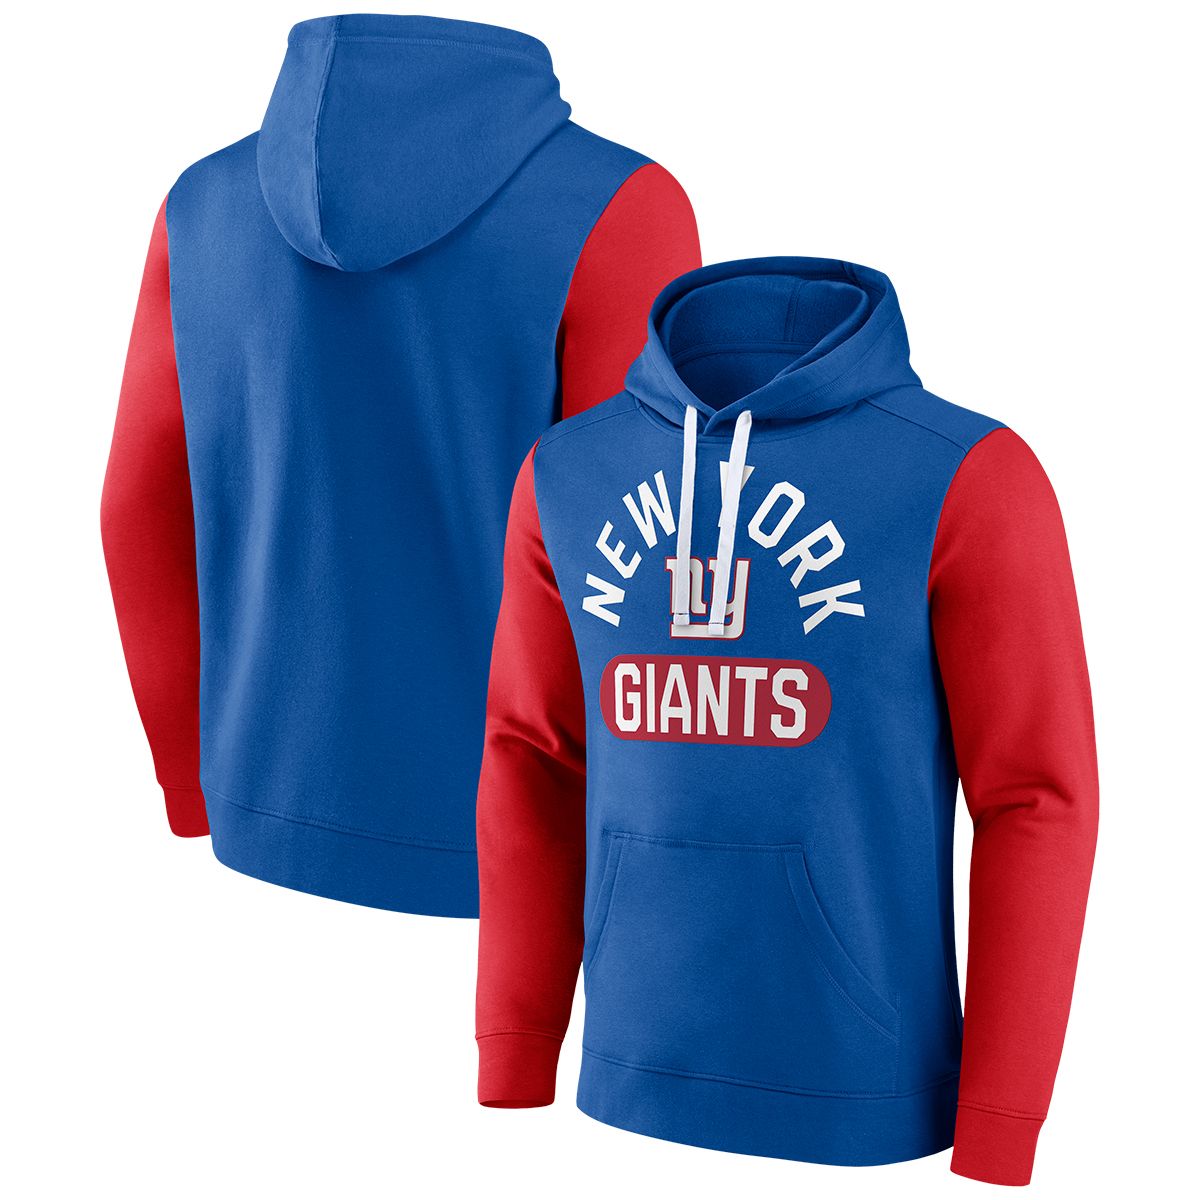 New York Giants Apparel & Gear: Jerseys, Tees & More